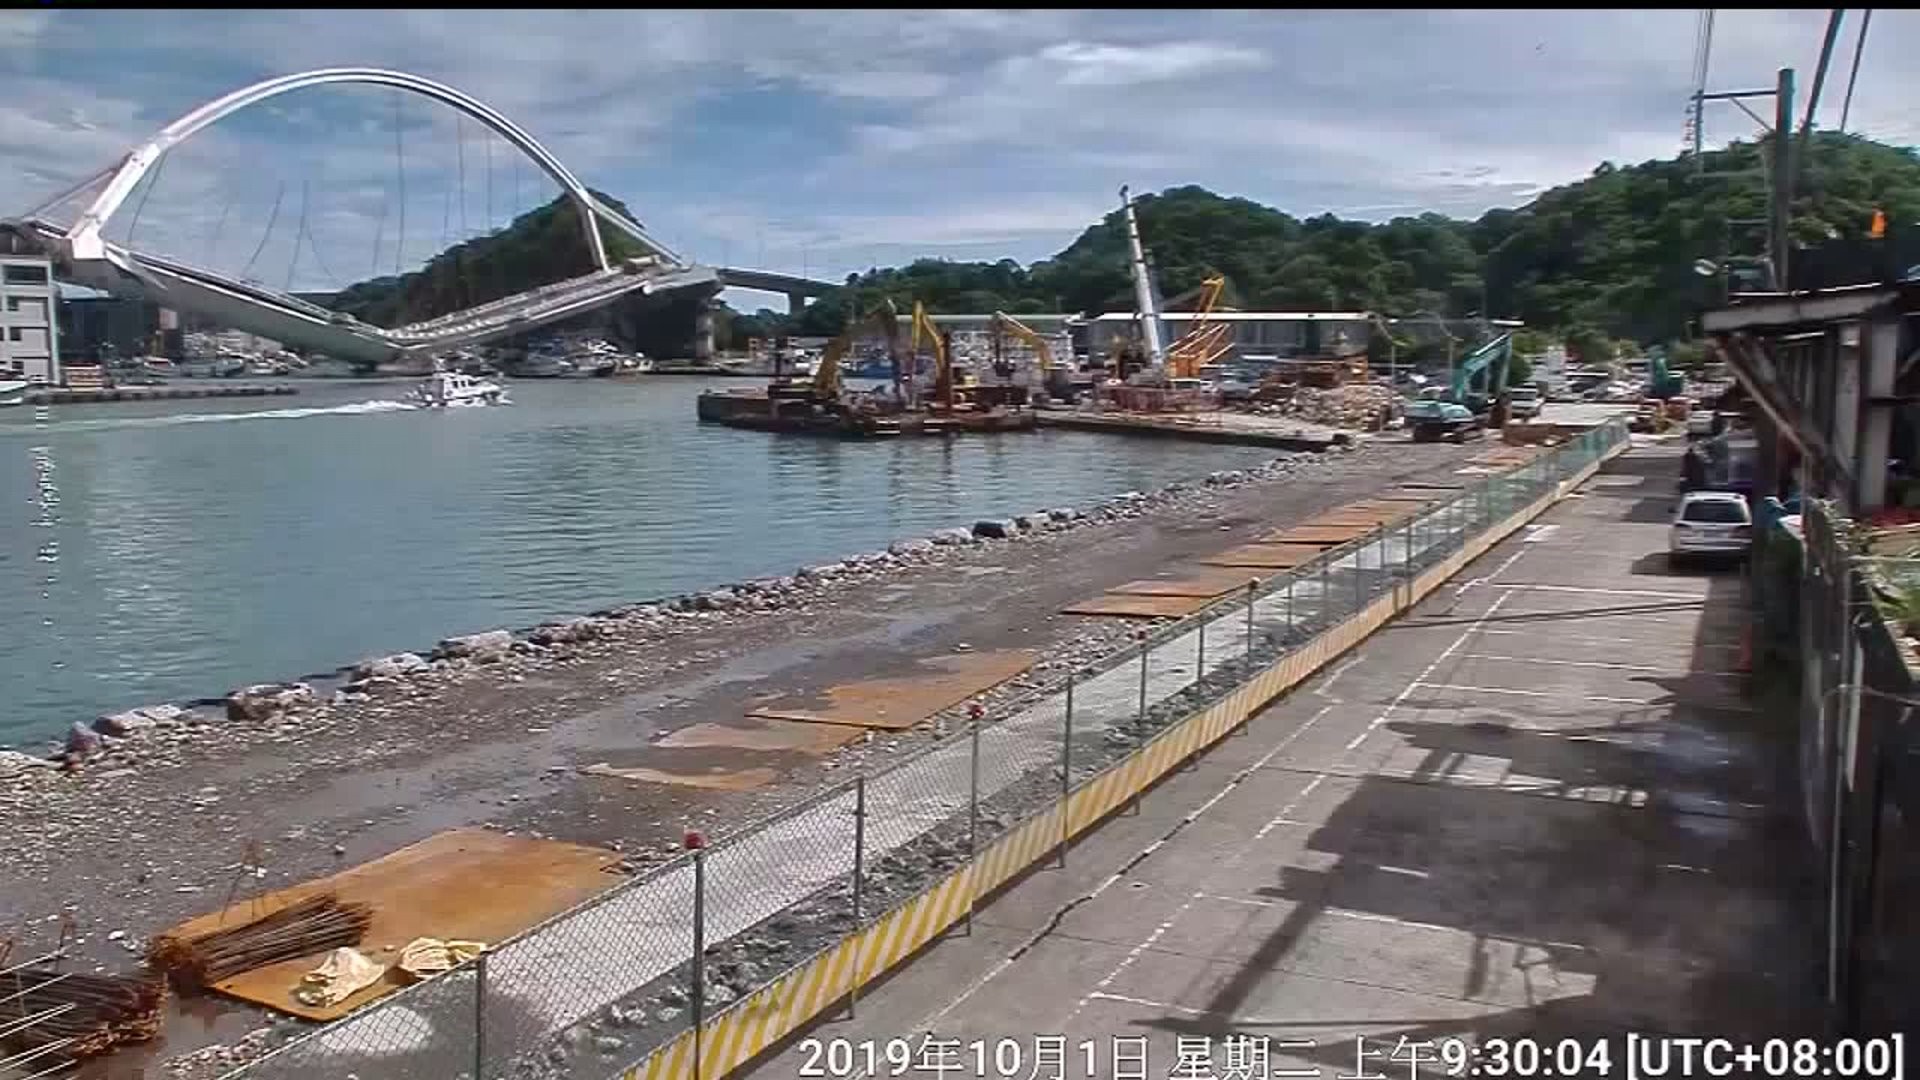 Bridge collapse in Taiwan caught on camera